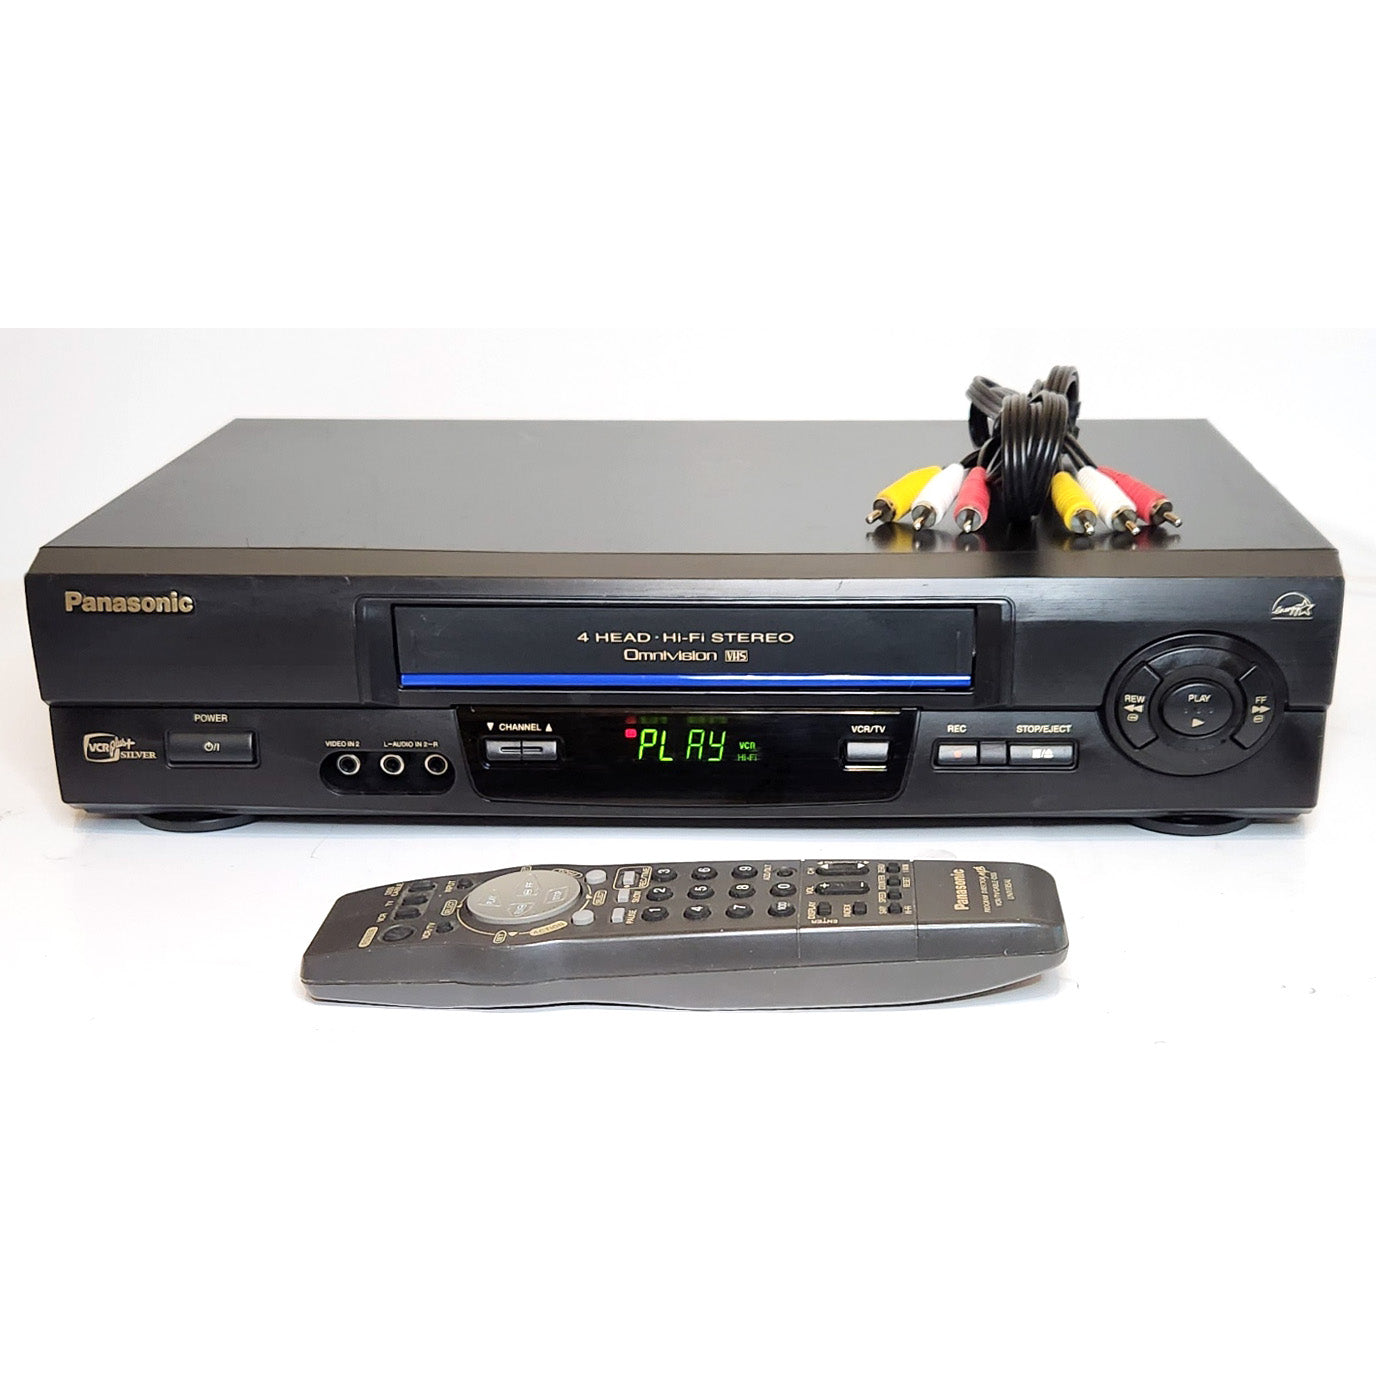 Panasonic PV-V4602 Omnivision VCR, 4-Head Hi-Fi Stereo